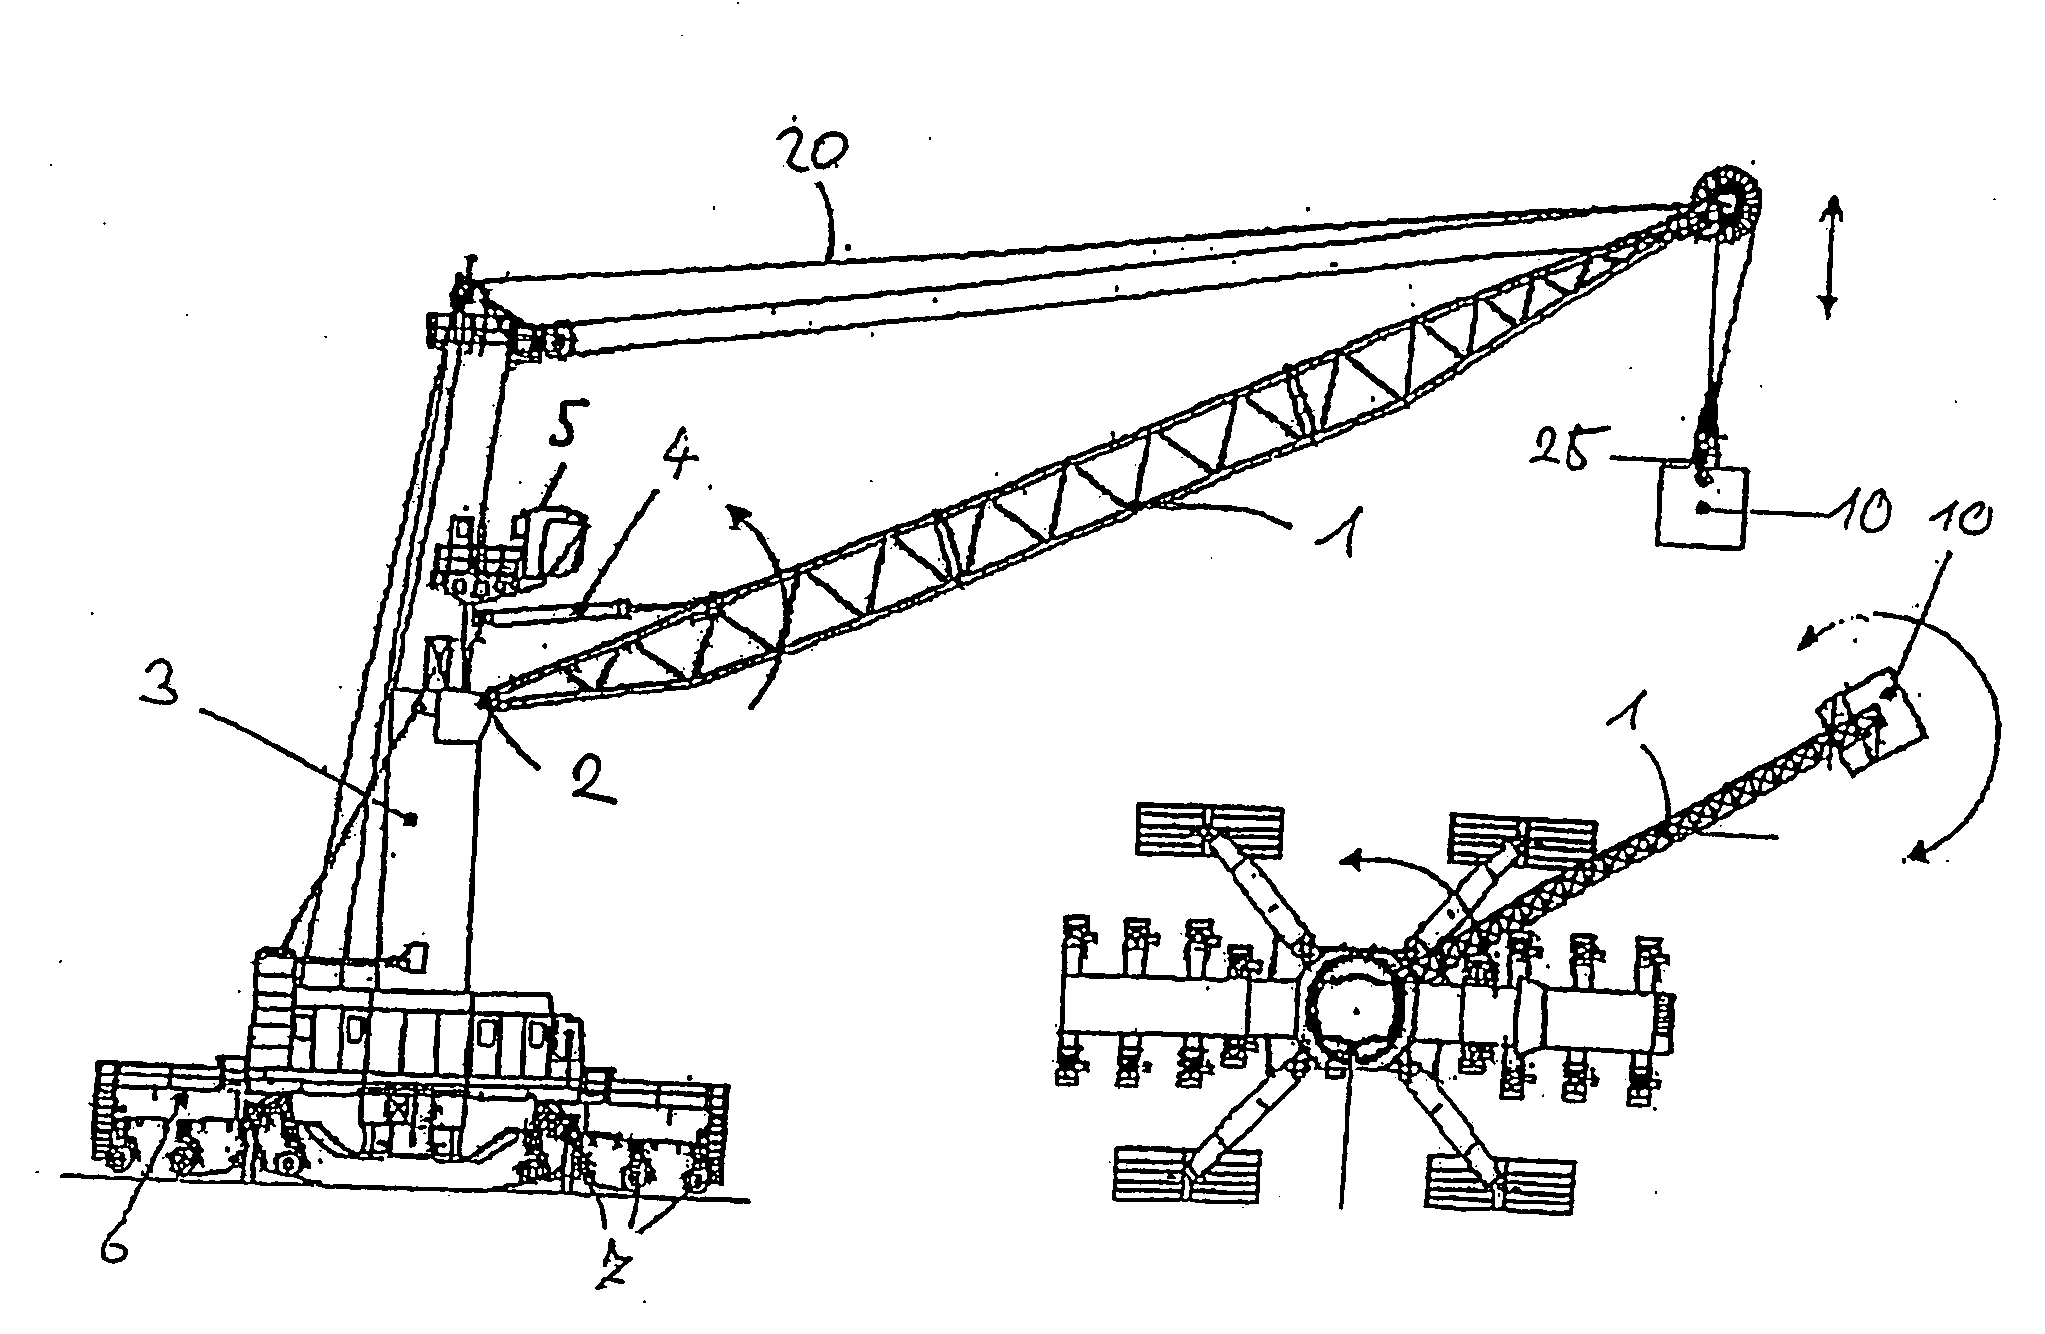 Crane control, crane and method